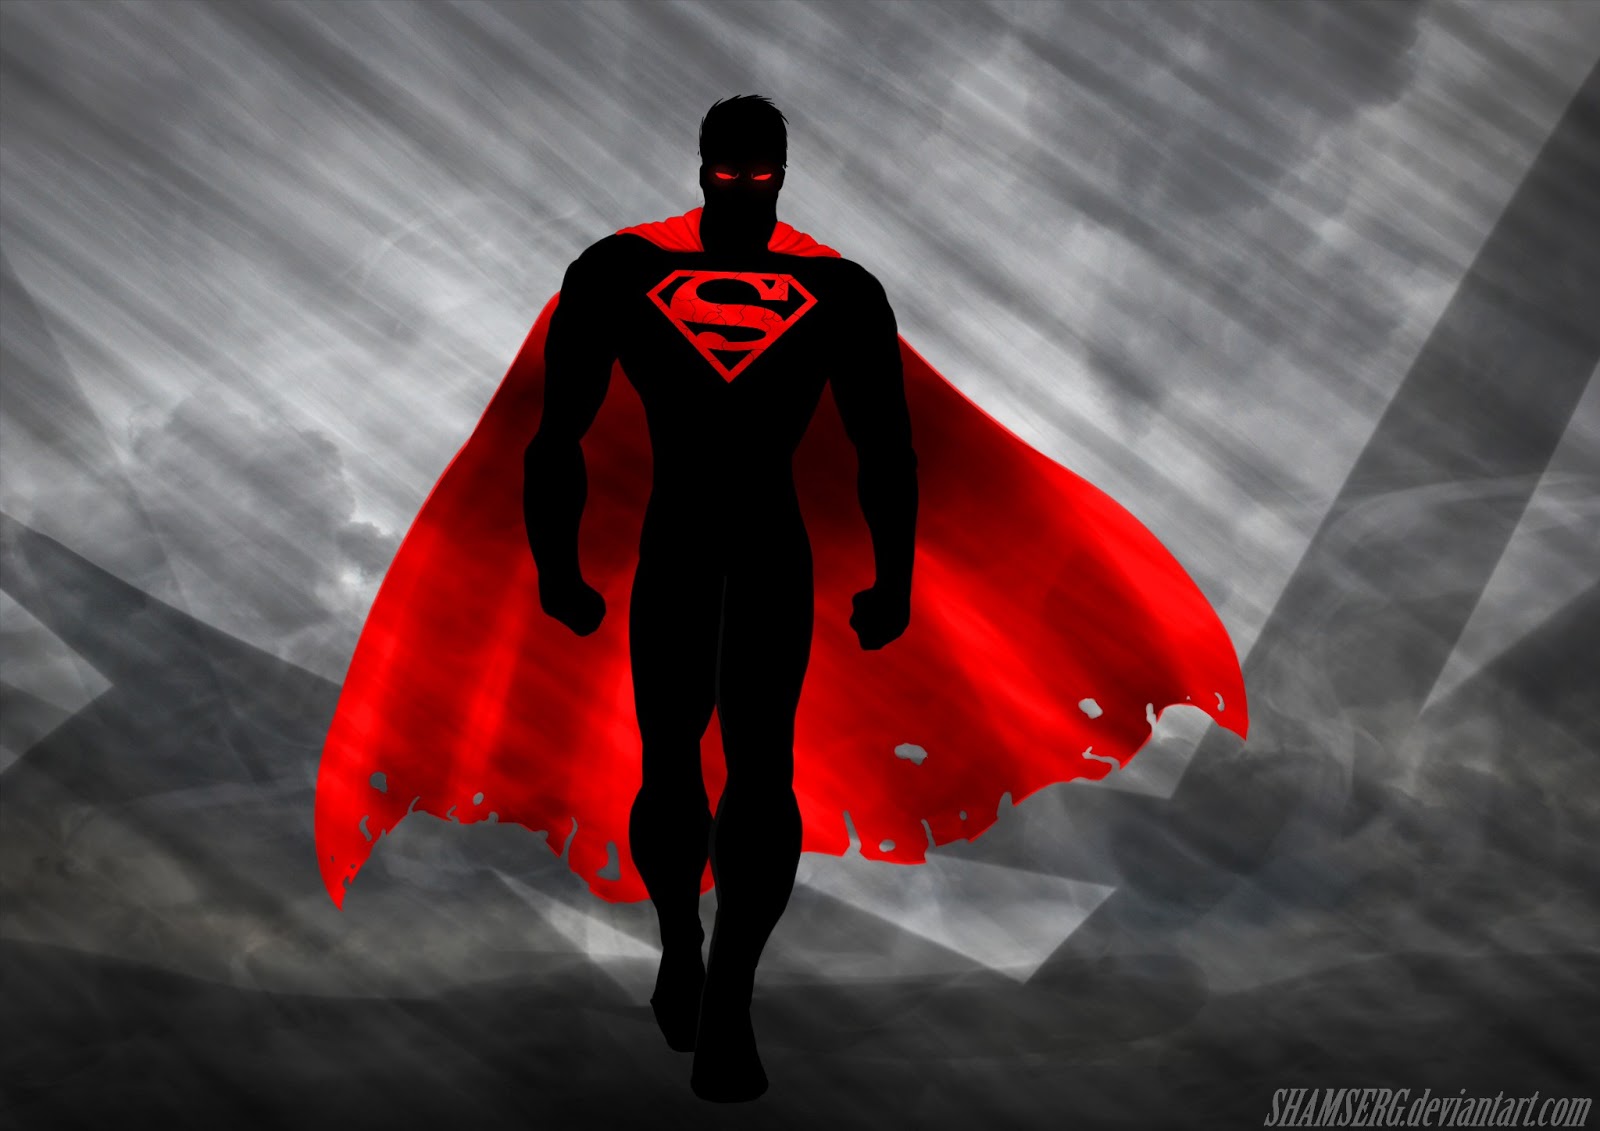  superman marvel comics superman superman superman comics wallpapers